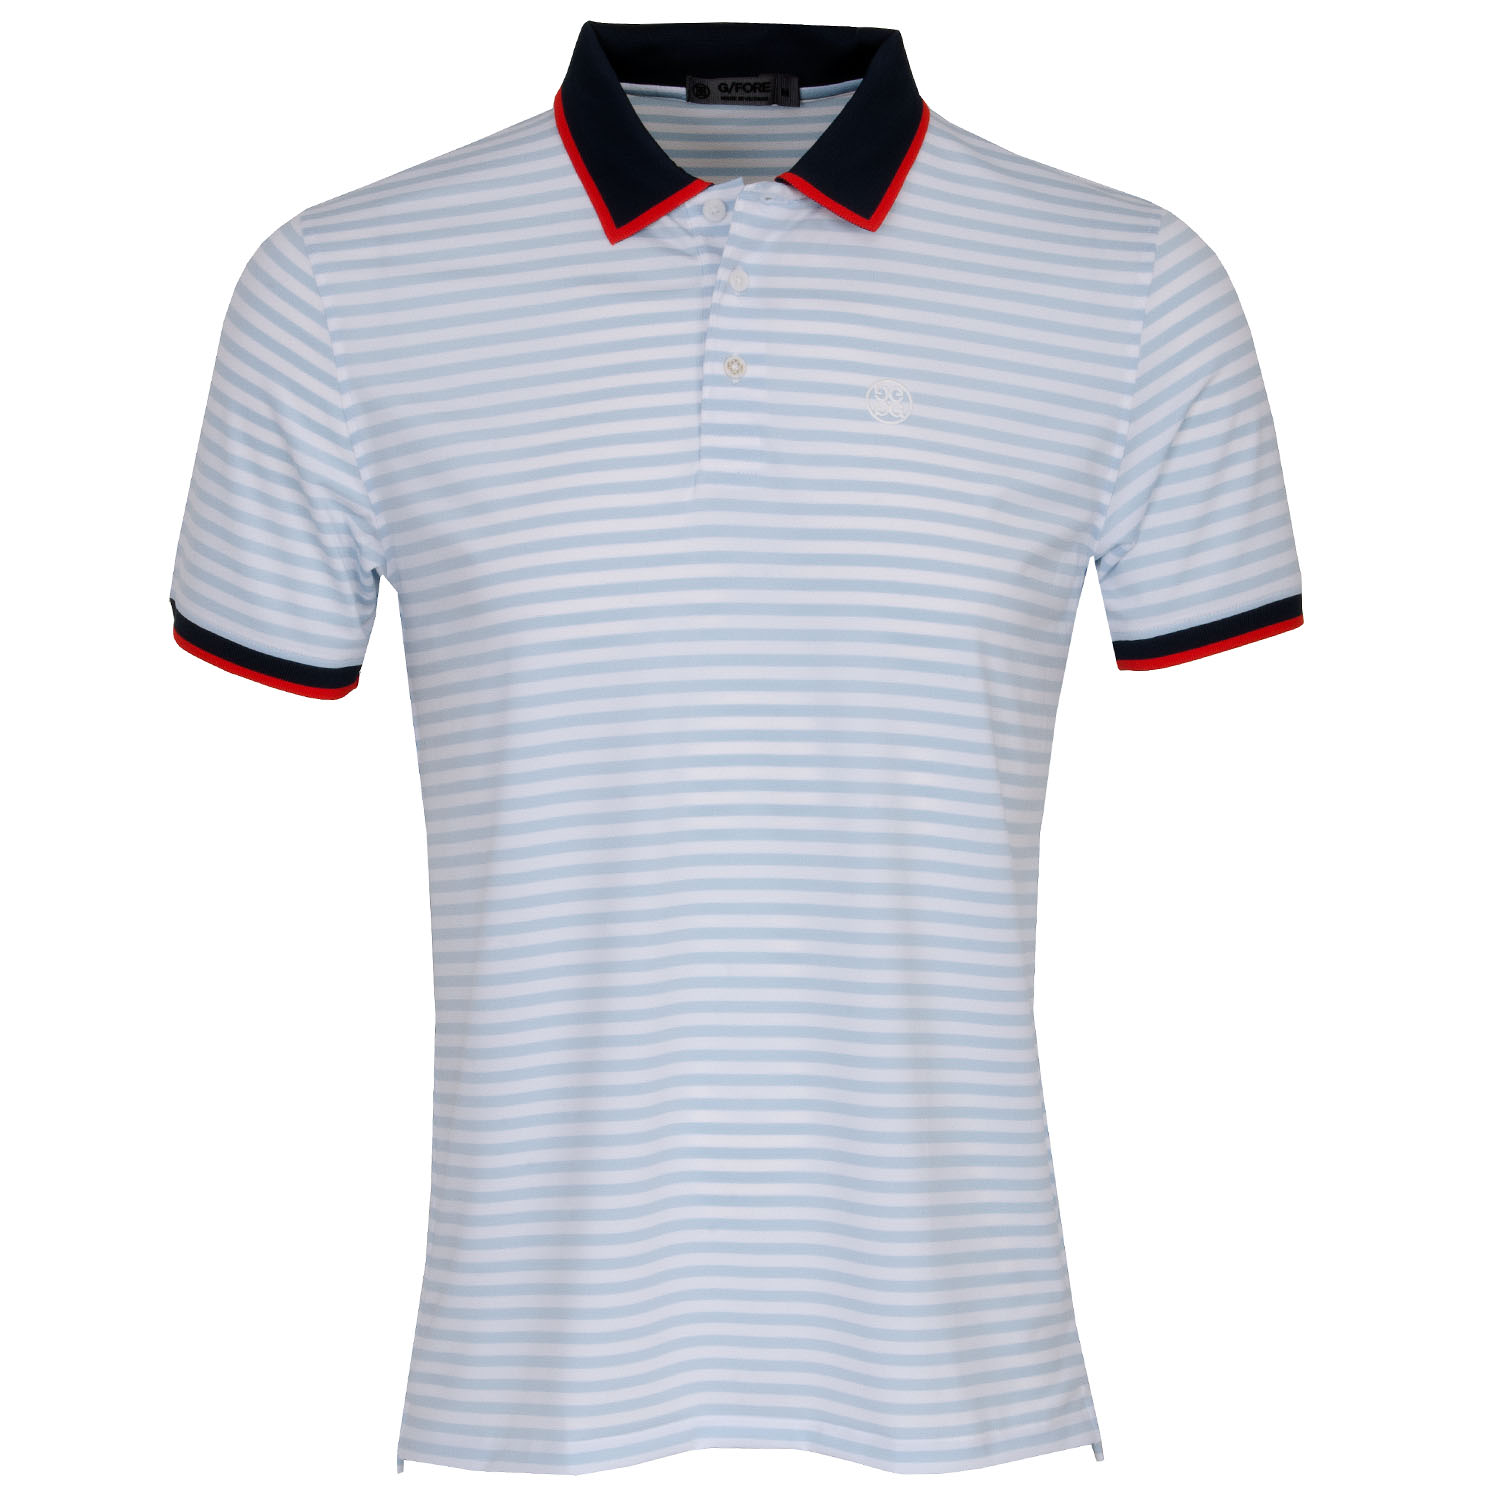 G/FORE Staple Stripe Polo Shirt